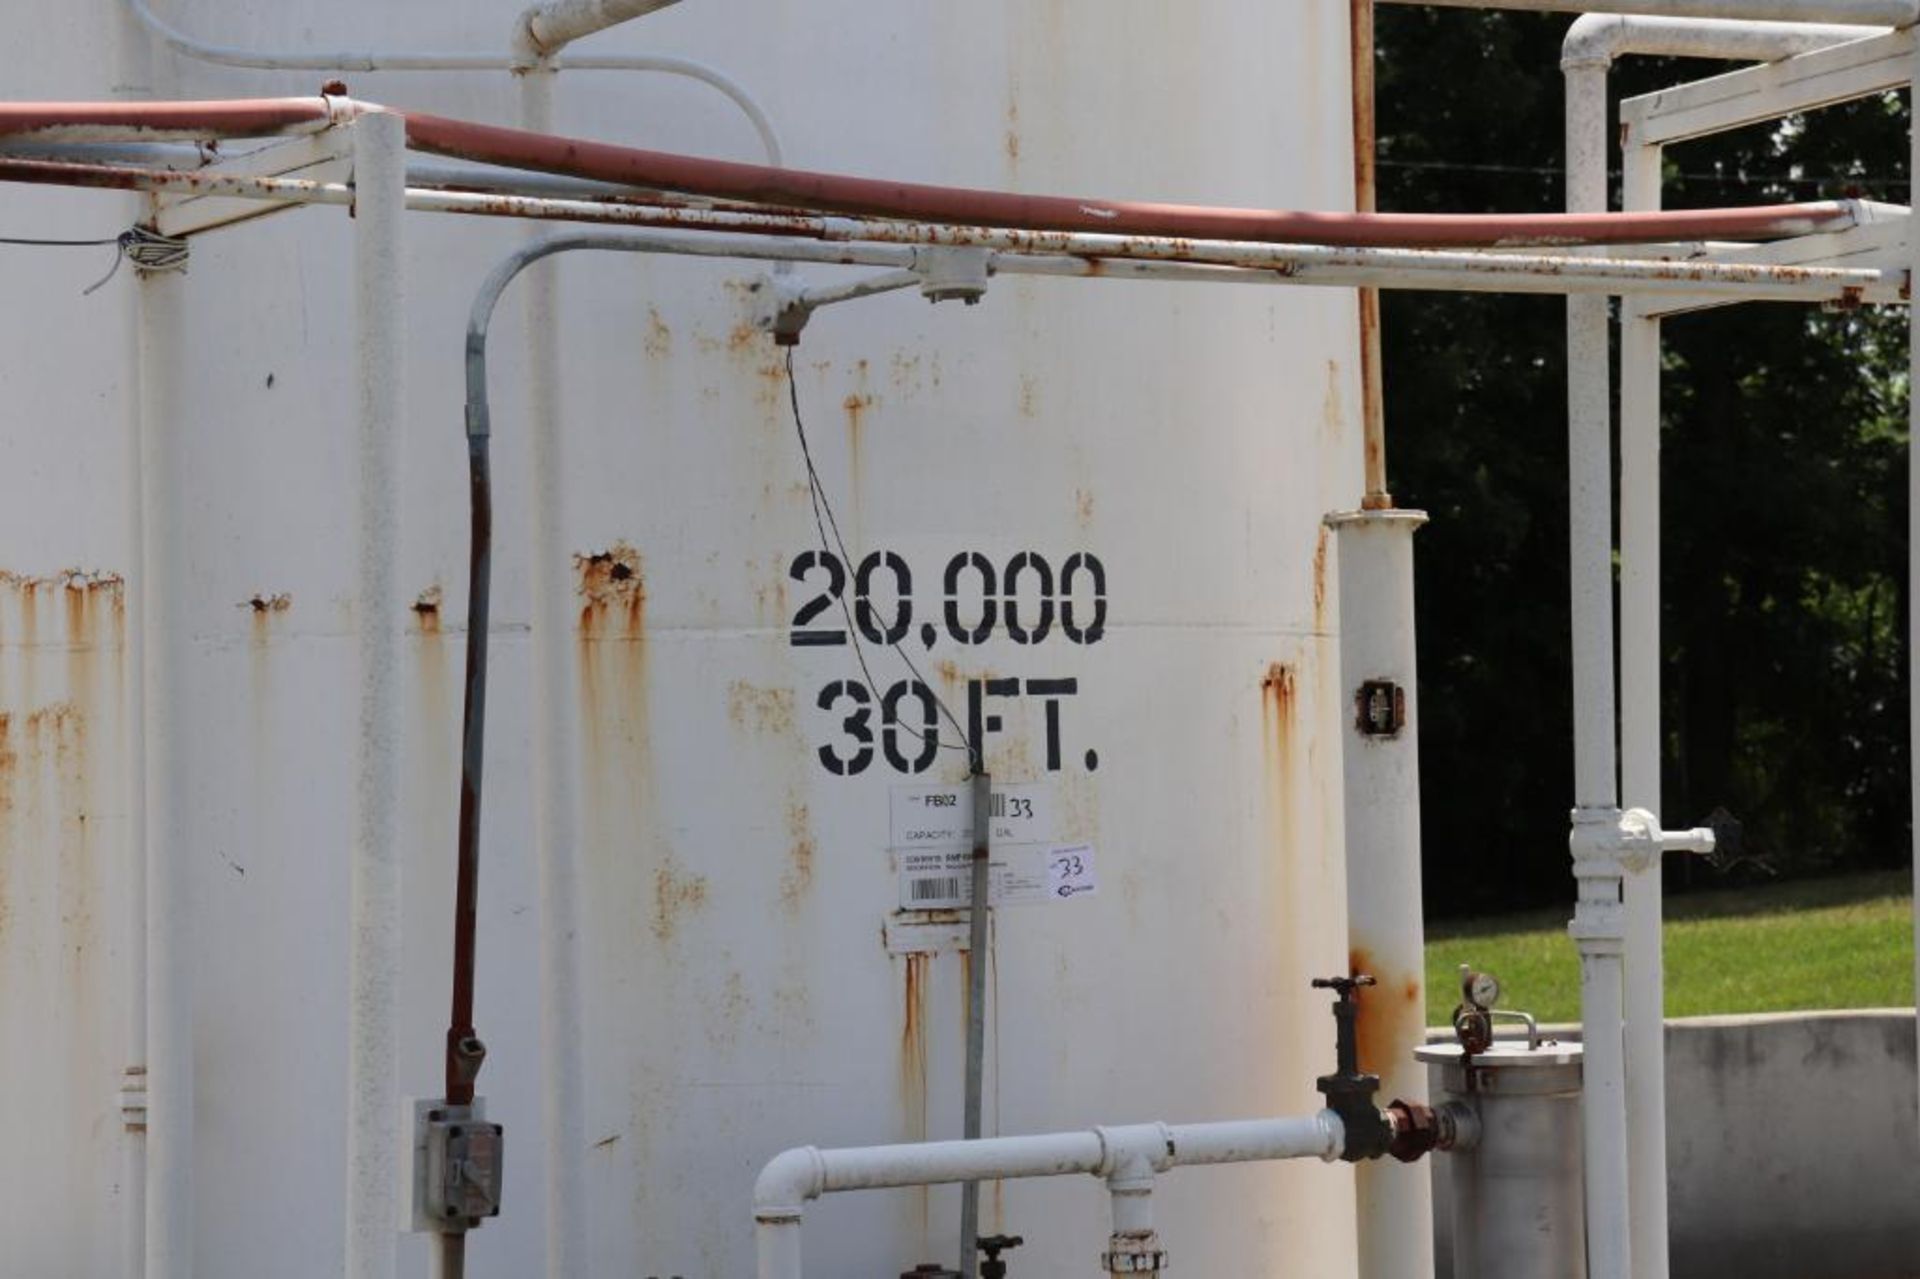 Tank farm section 15k - 30k gallon vertical tanks - Image 6 of 19